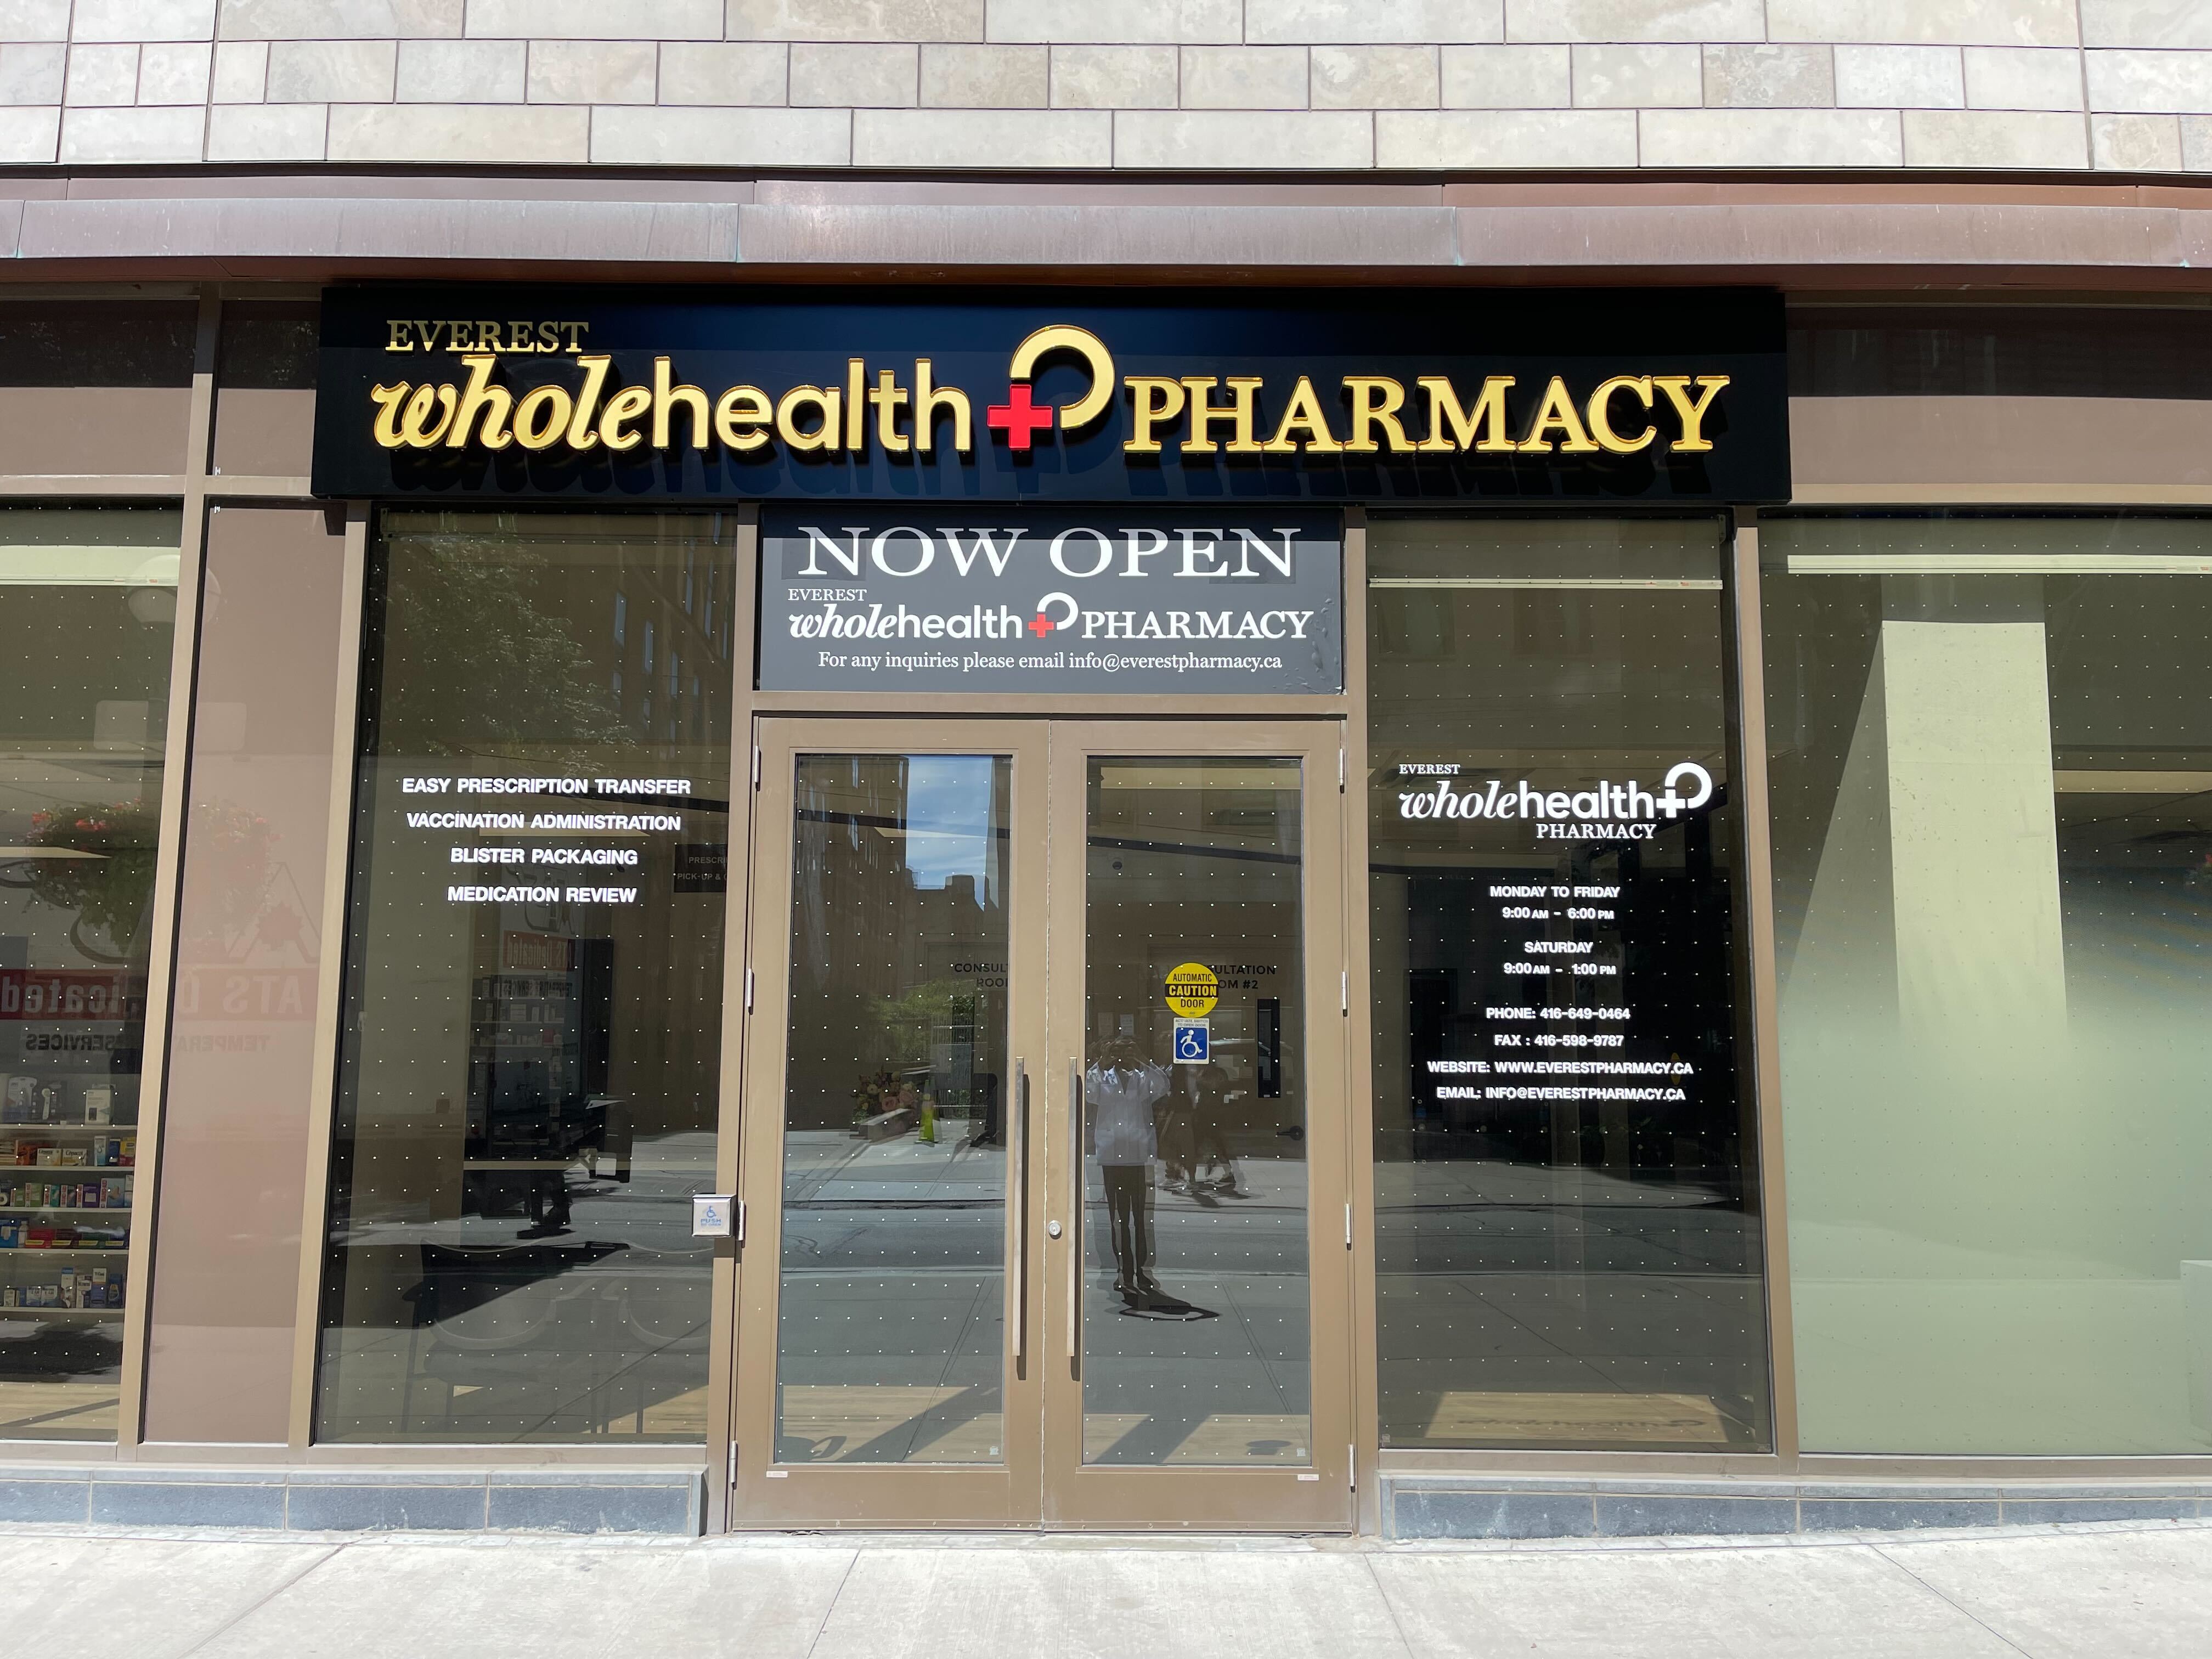 Everest Whole Health Pharmacy